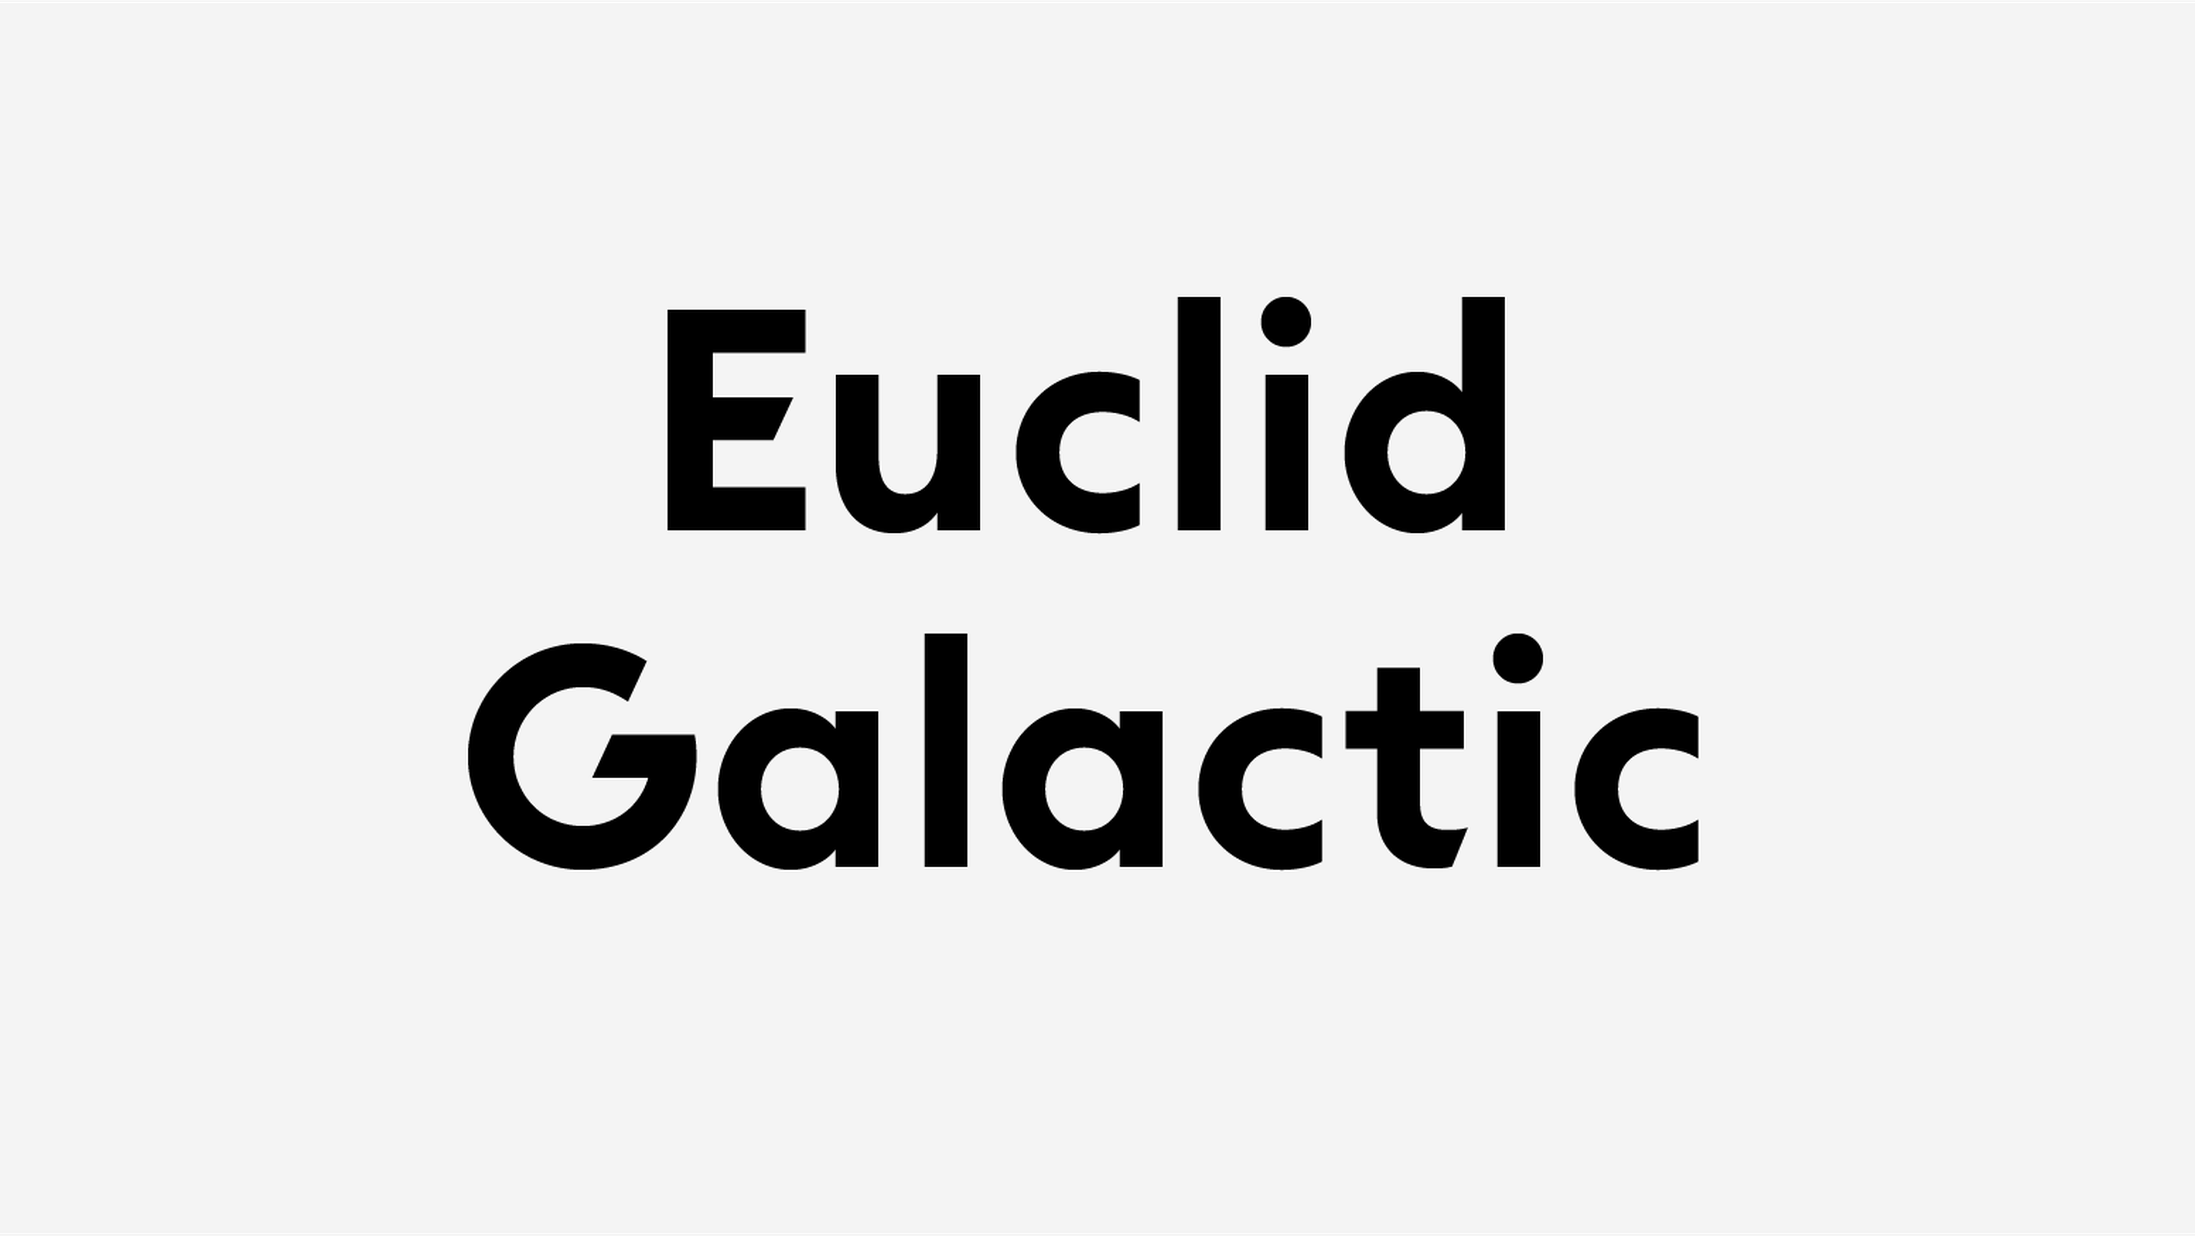 Example font Euclid Galactic #1